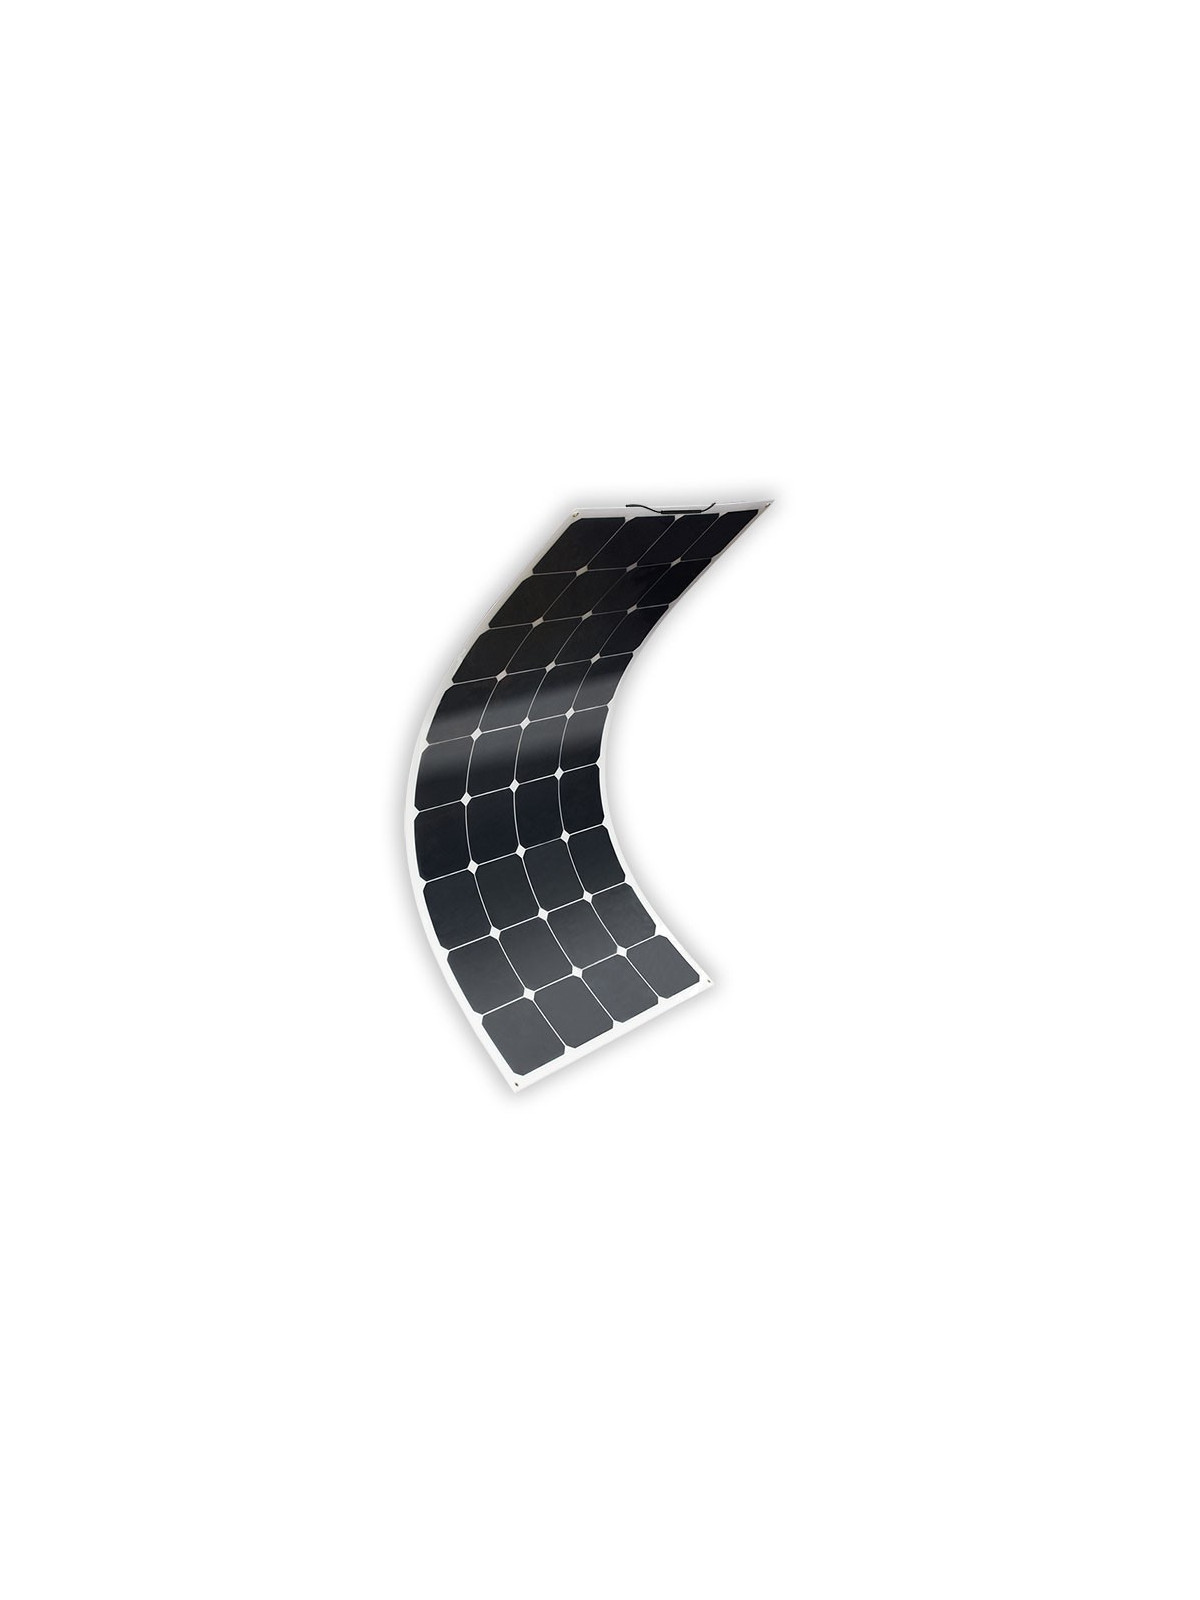 MX FLEX 100Wp PROTECT 12V flexible solar panel